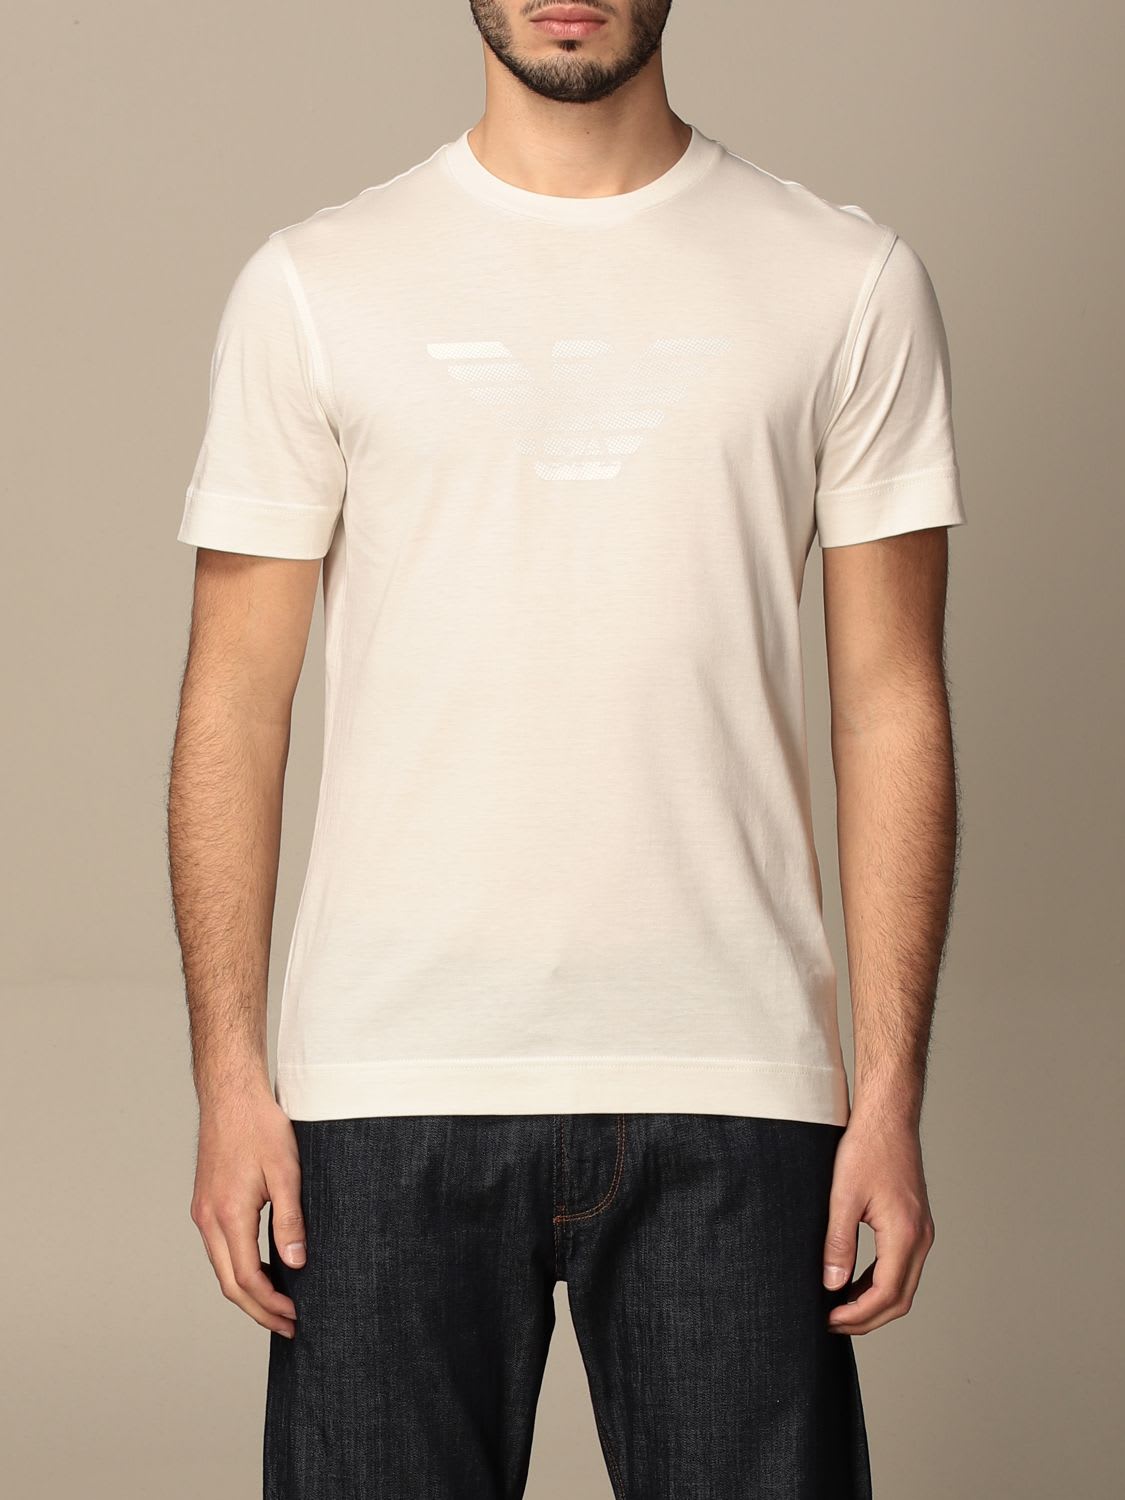 Emporio Armani T-shirt Emporio Armani Cotton T-shirt With Rubberized Logo